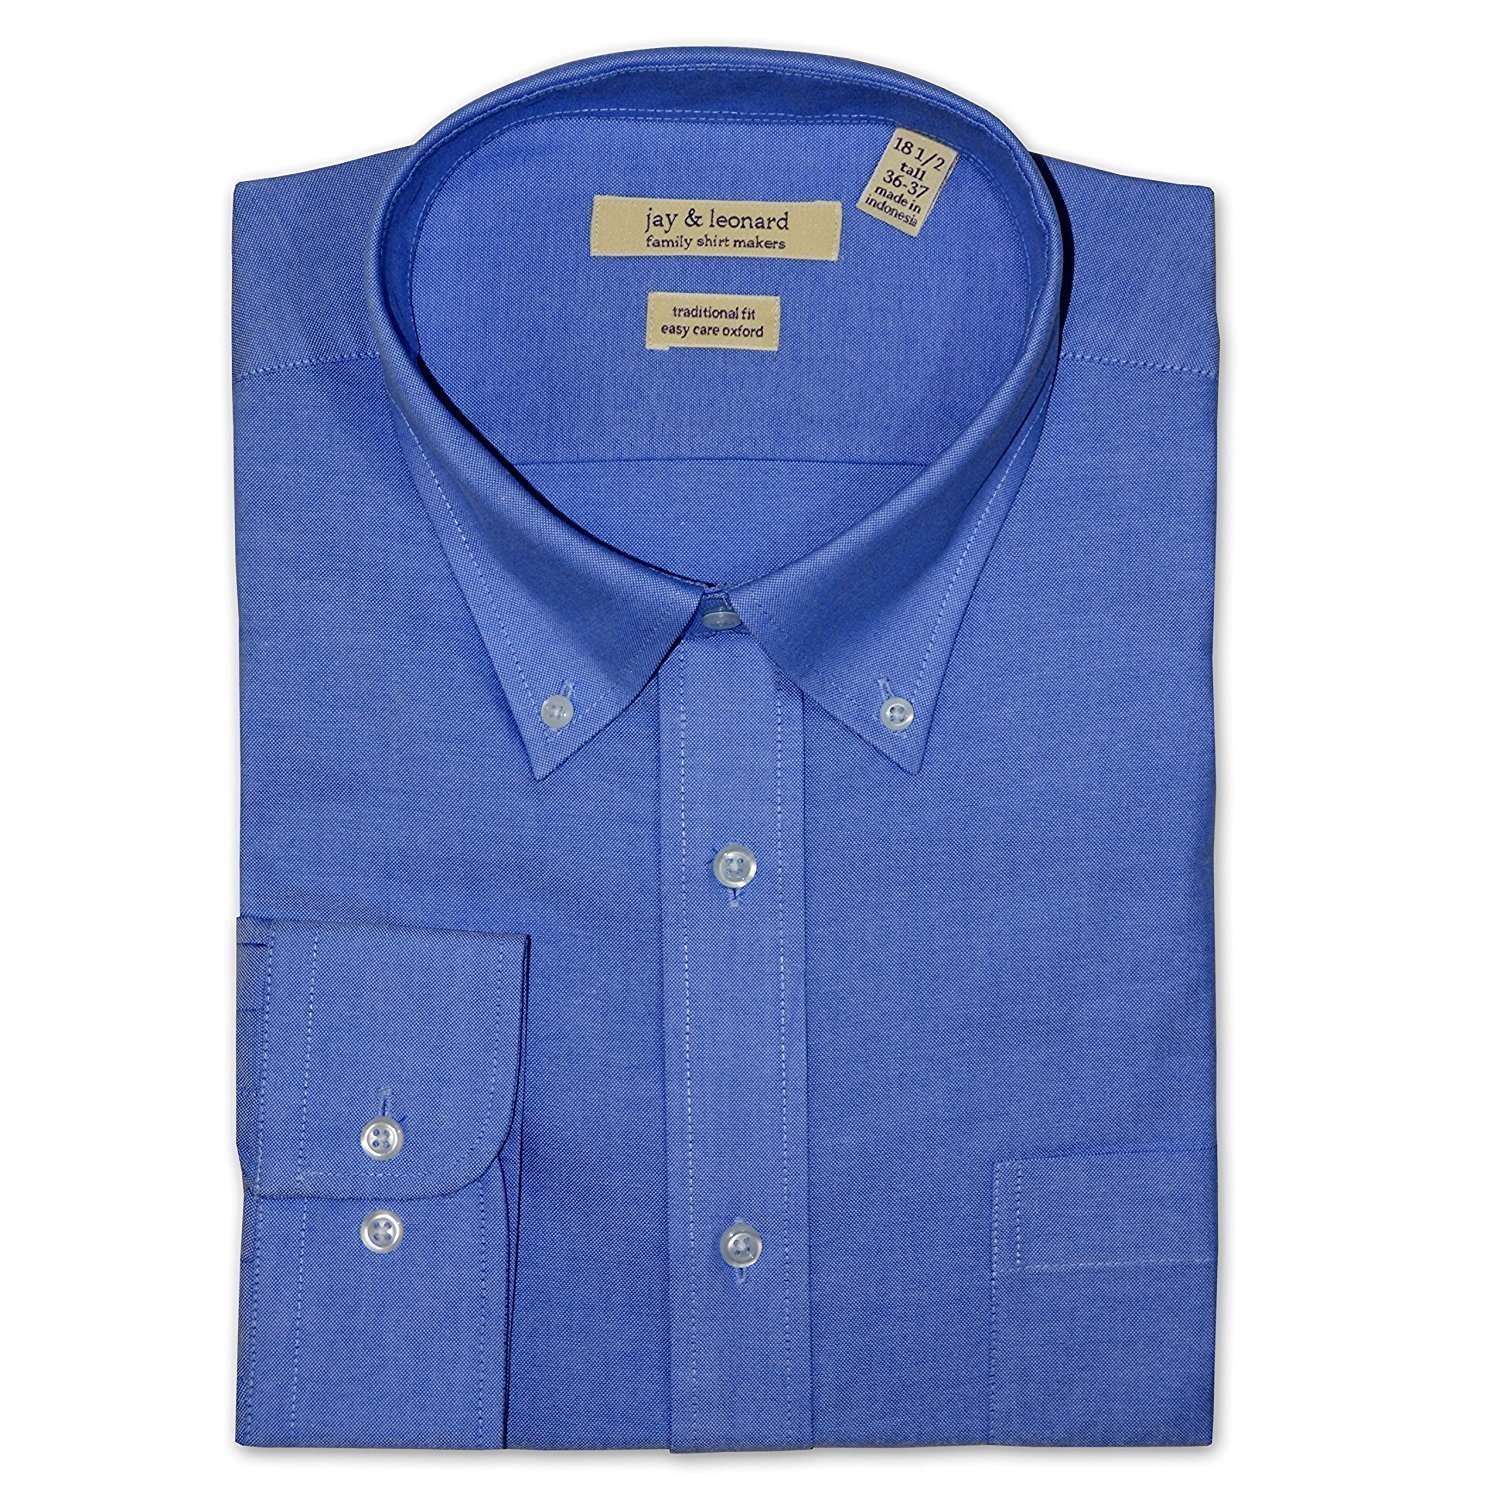 Jay & Leonard / Modena Men's J200BDR Long Sleeve Button Down Oxford Shirt - French Blue - 15.5 2/3 - image 1 of 1